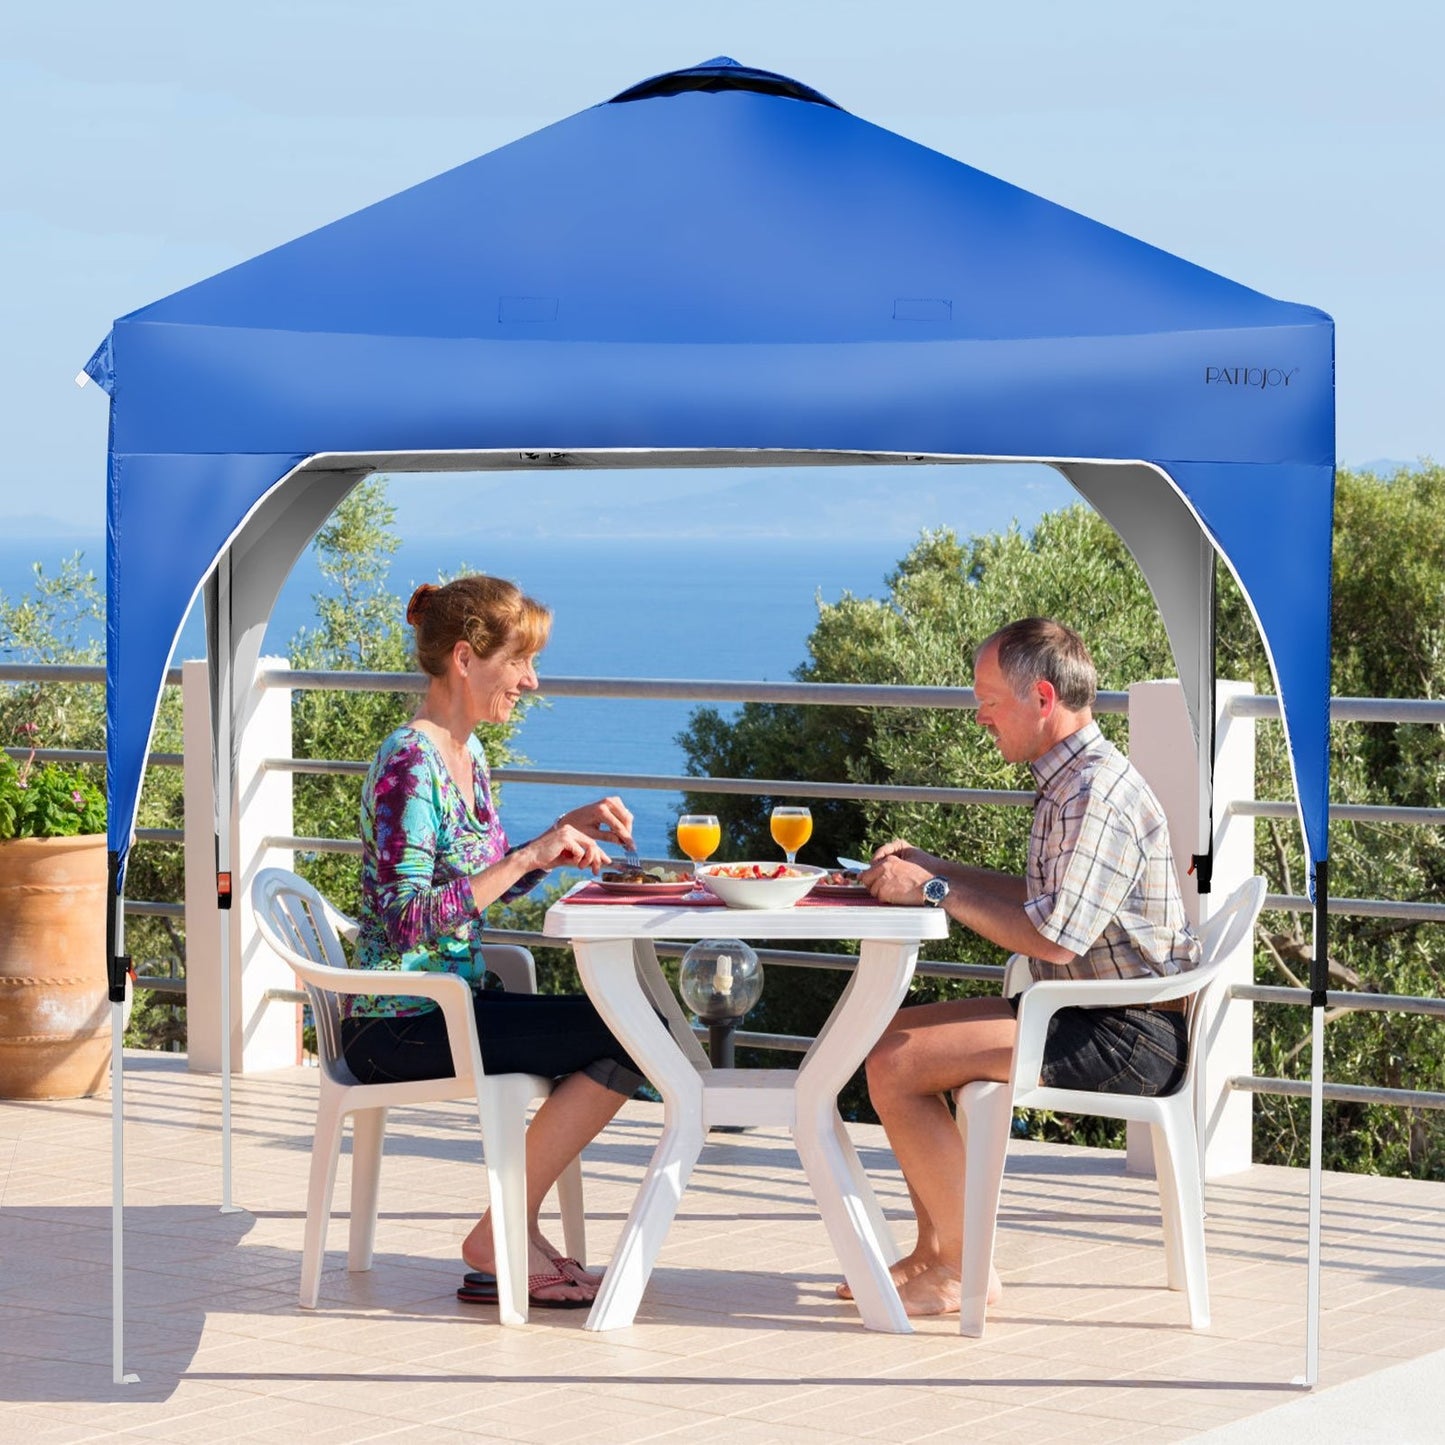 8 Feet x 8 Feet Outdoor Pop Up Tent Canopy Camping Sun Shelter with Roller Bag, Blue